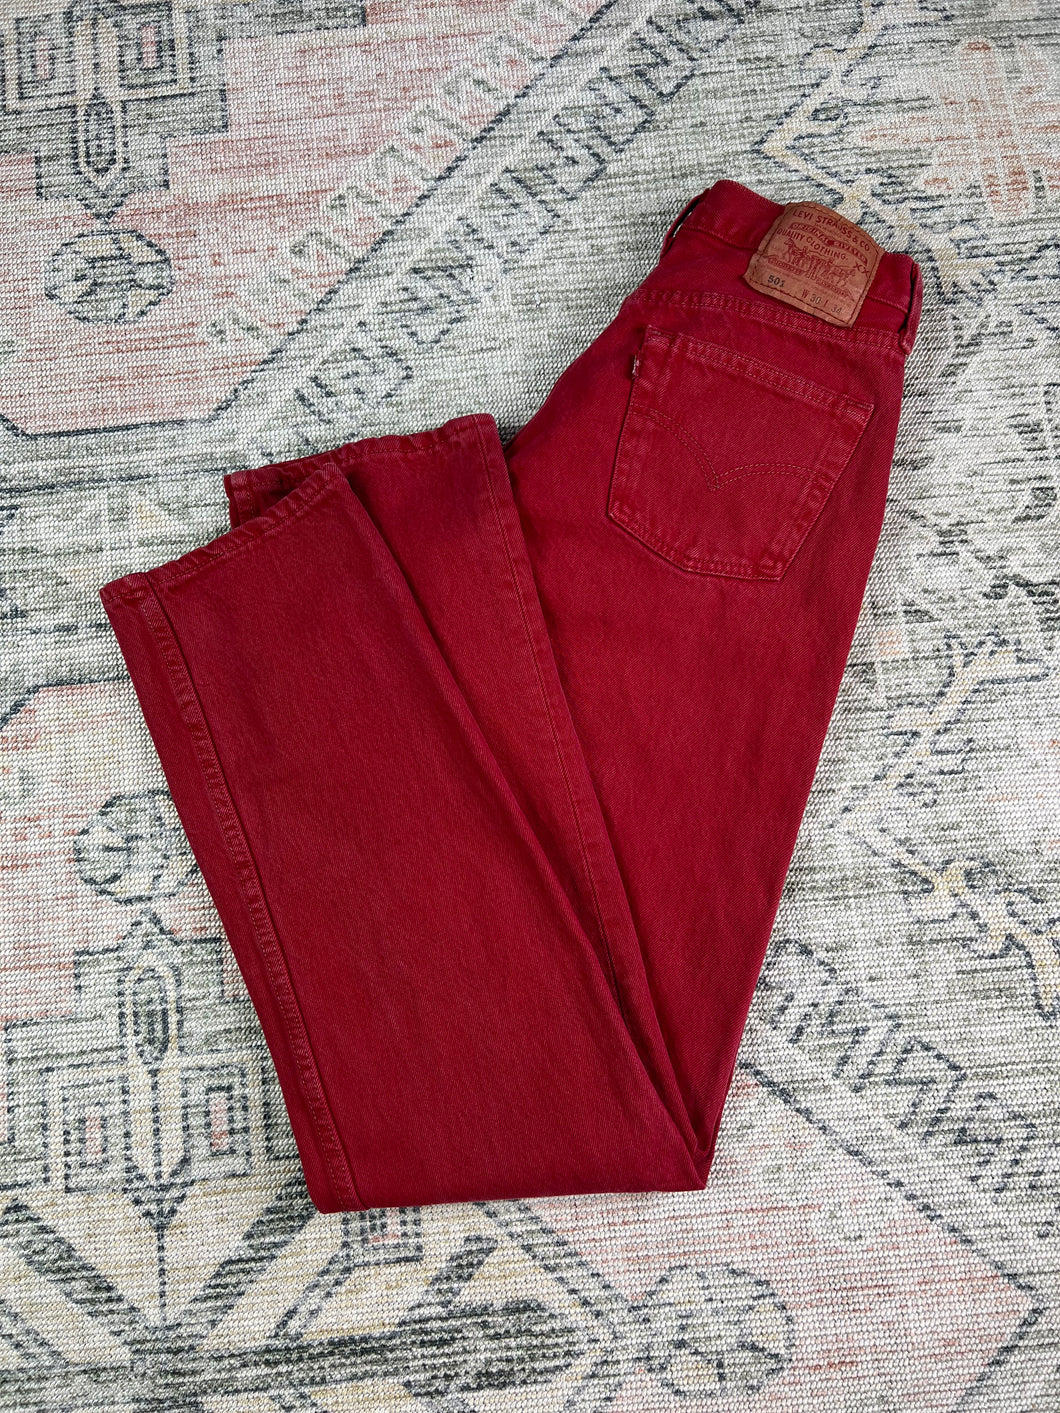 Vintage 90s Levi’s 501 Red Jeans (28x34)